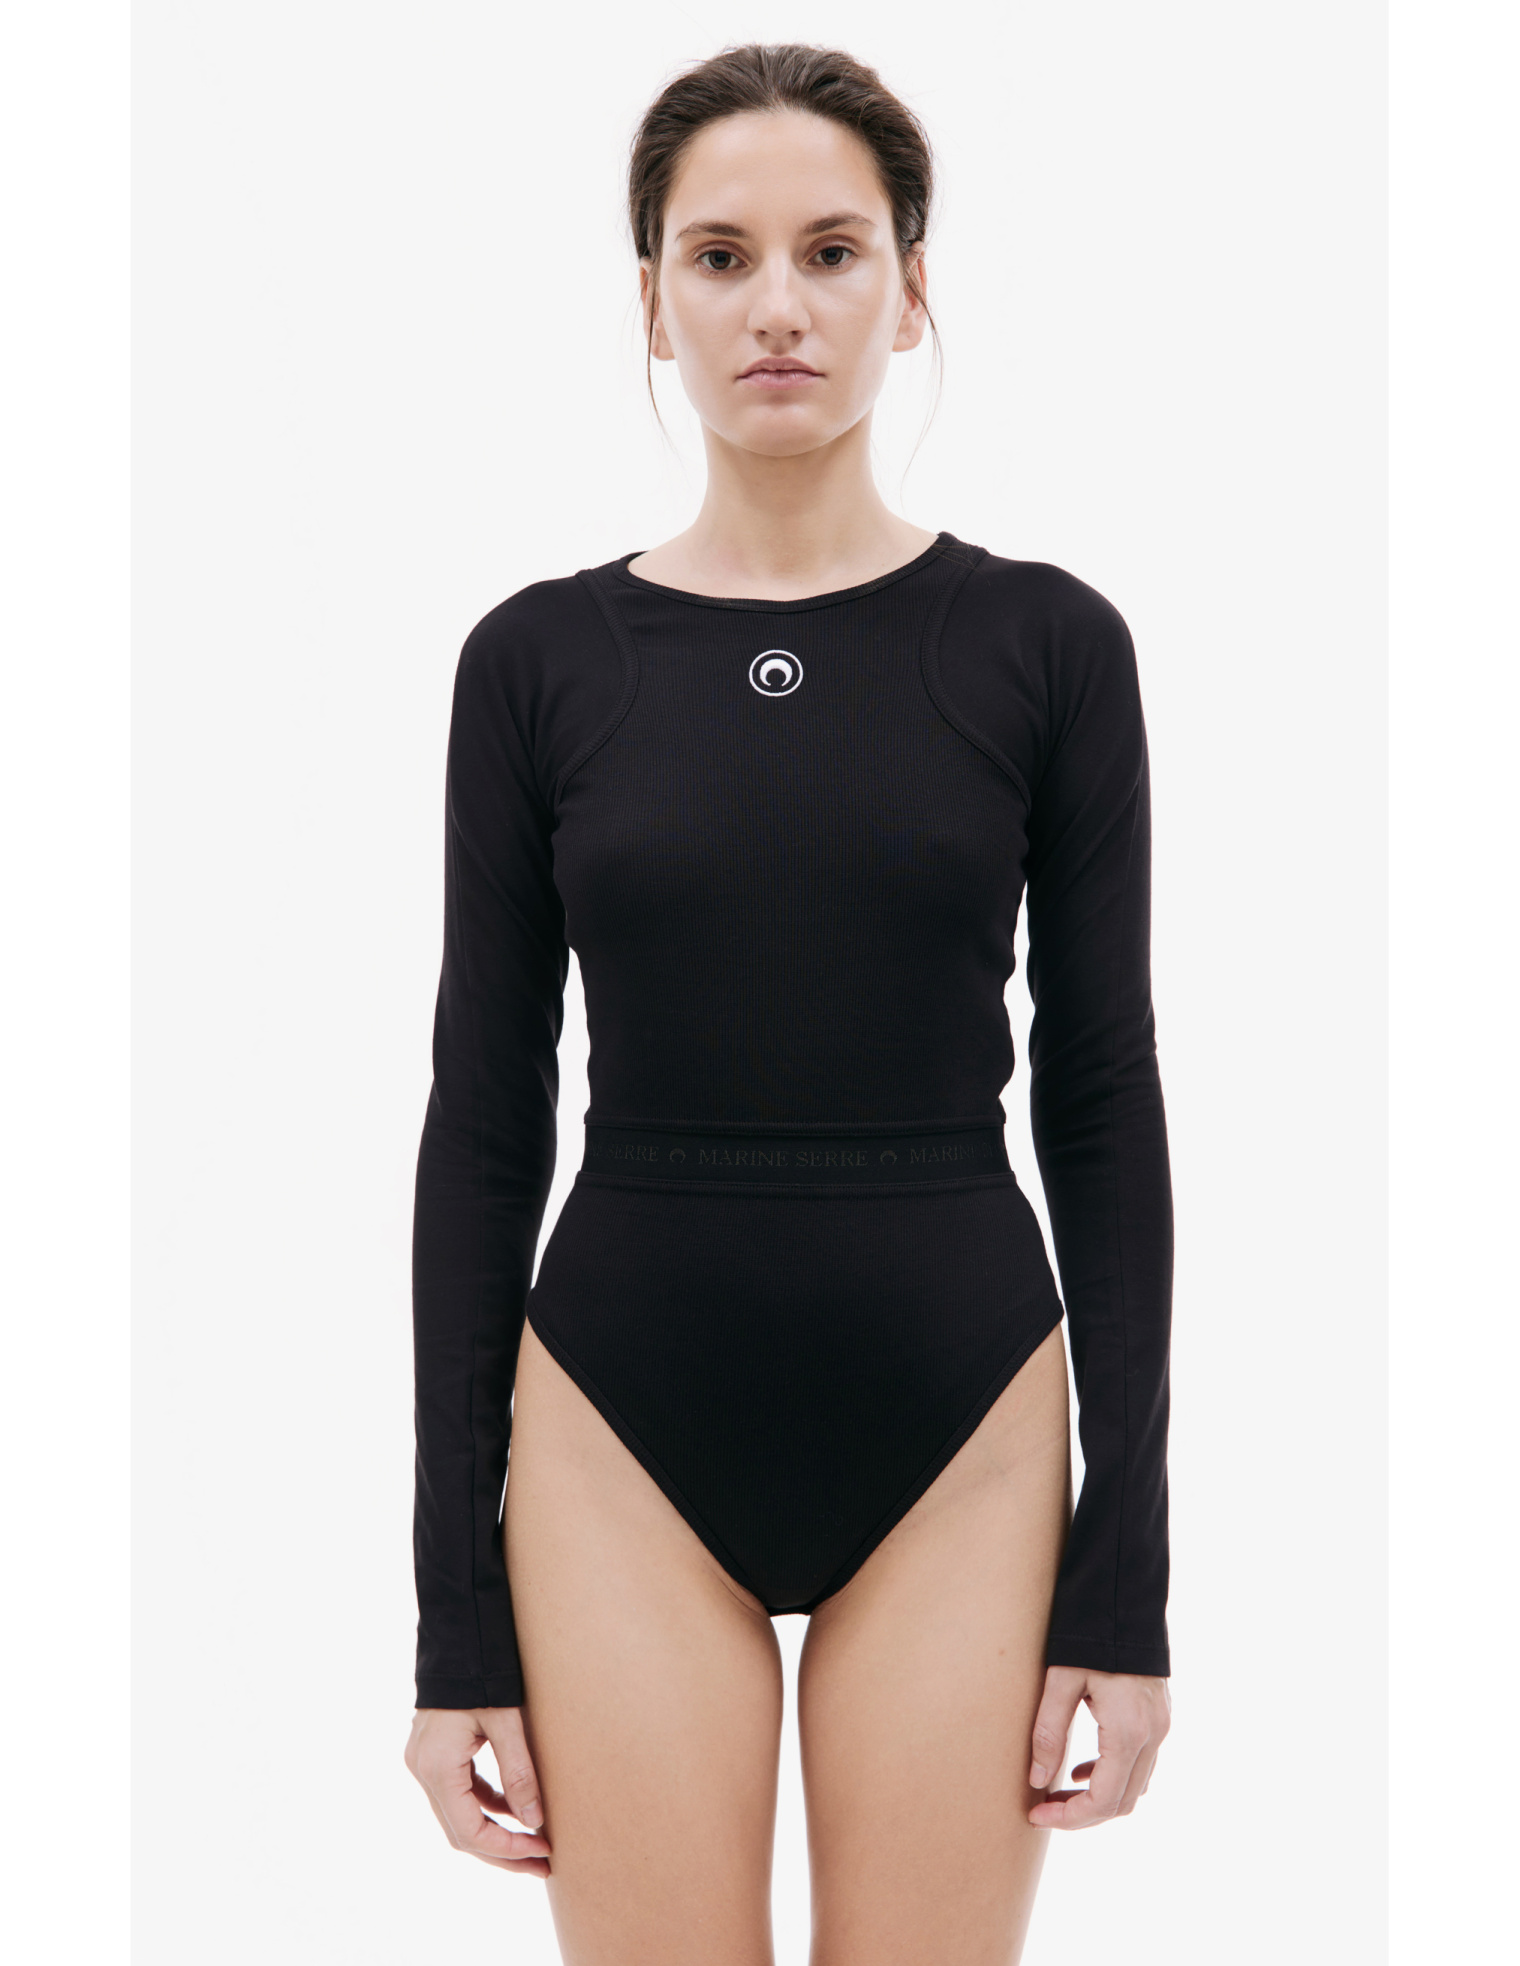 Buy MARINE SERRE men black embroidered bodysuit for $224 online on